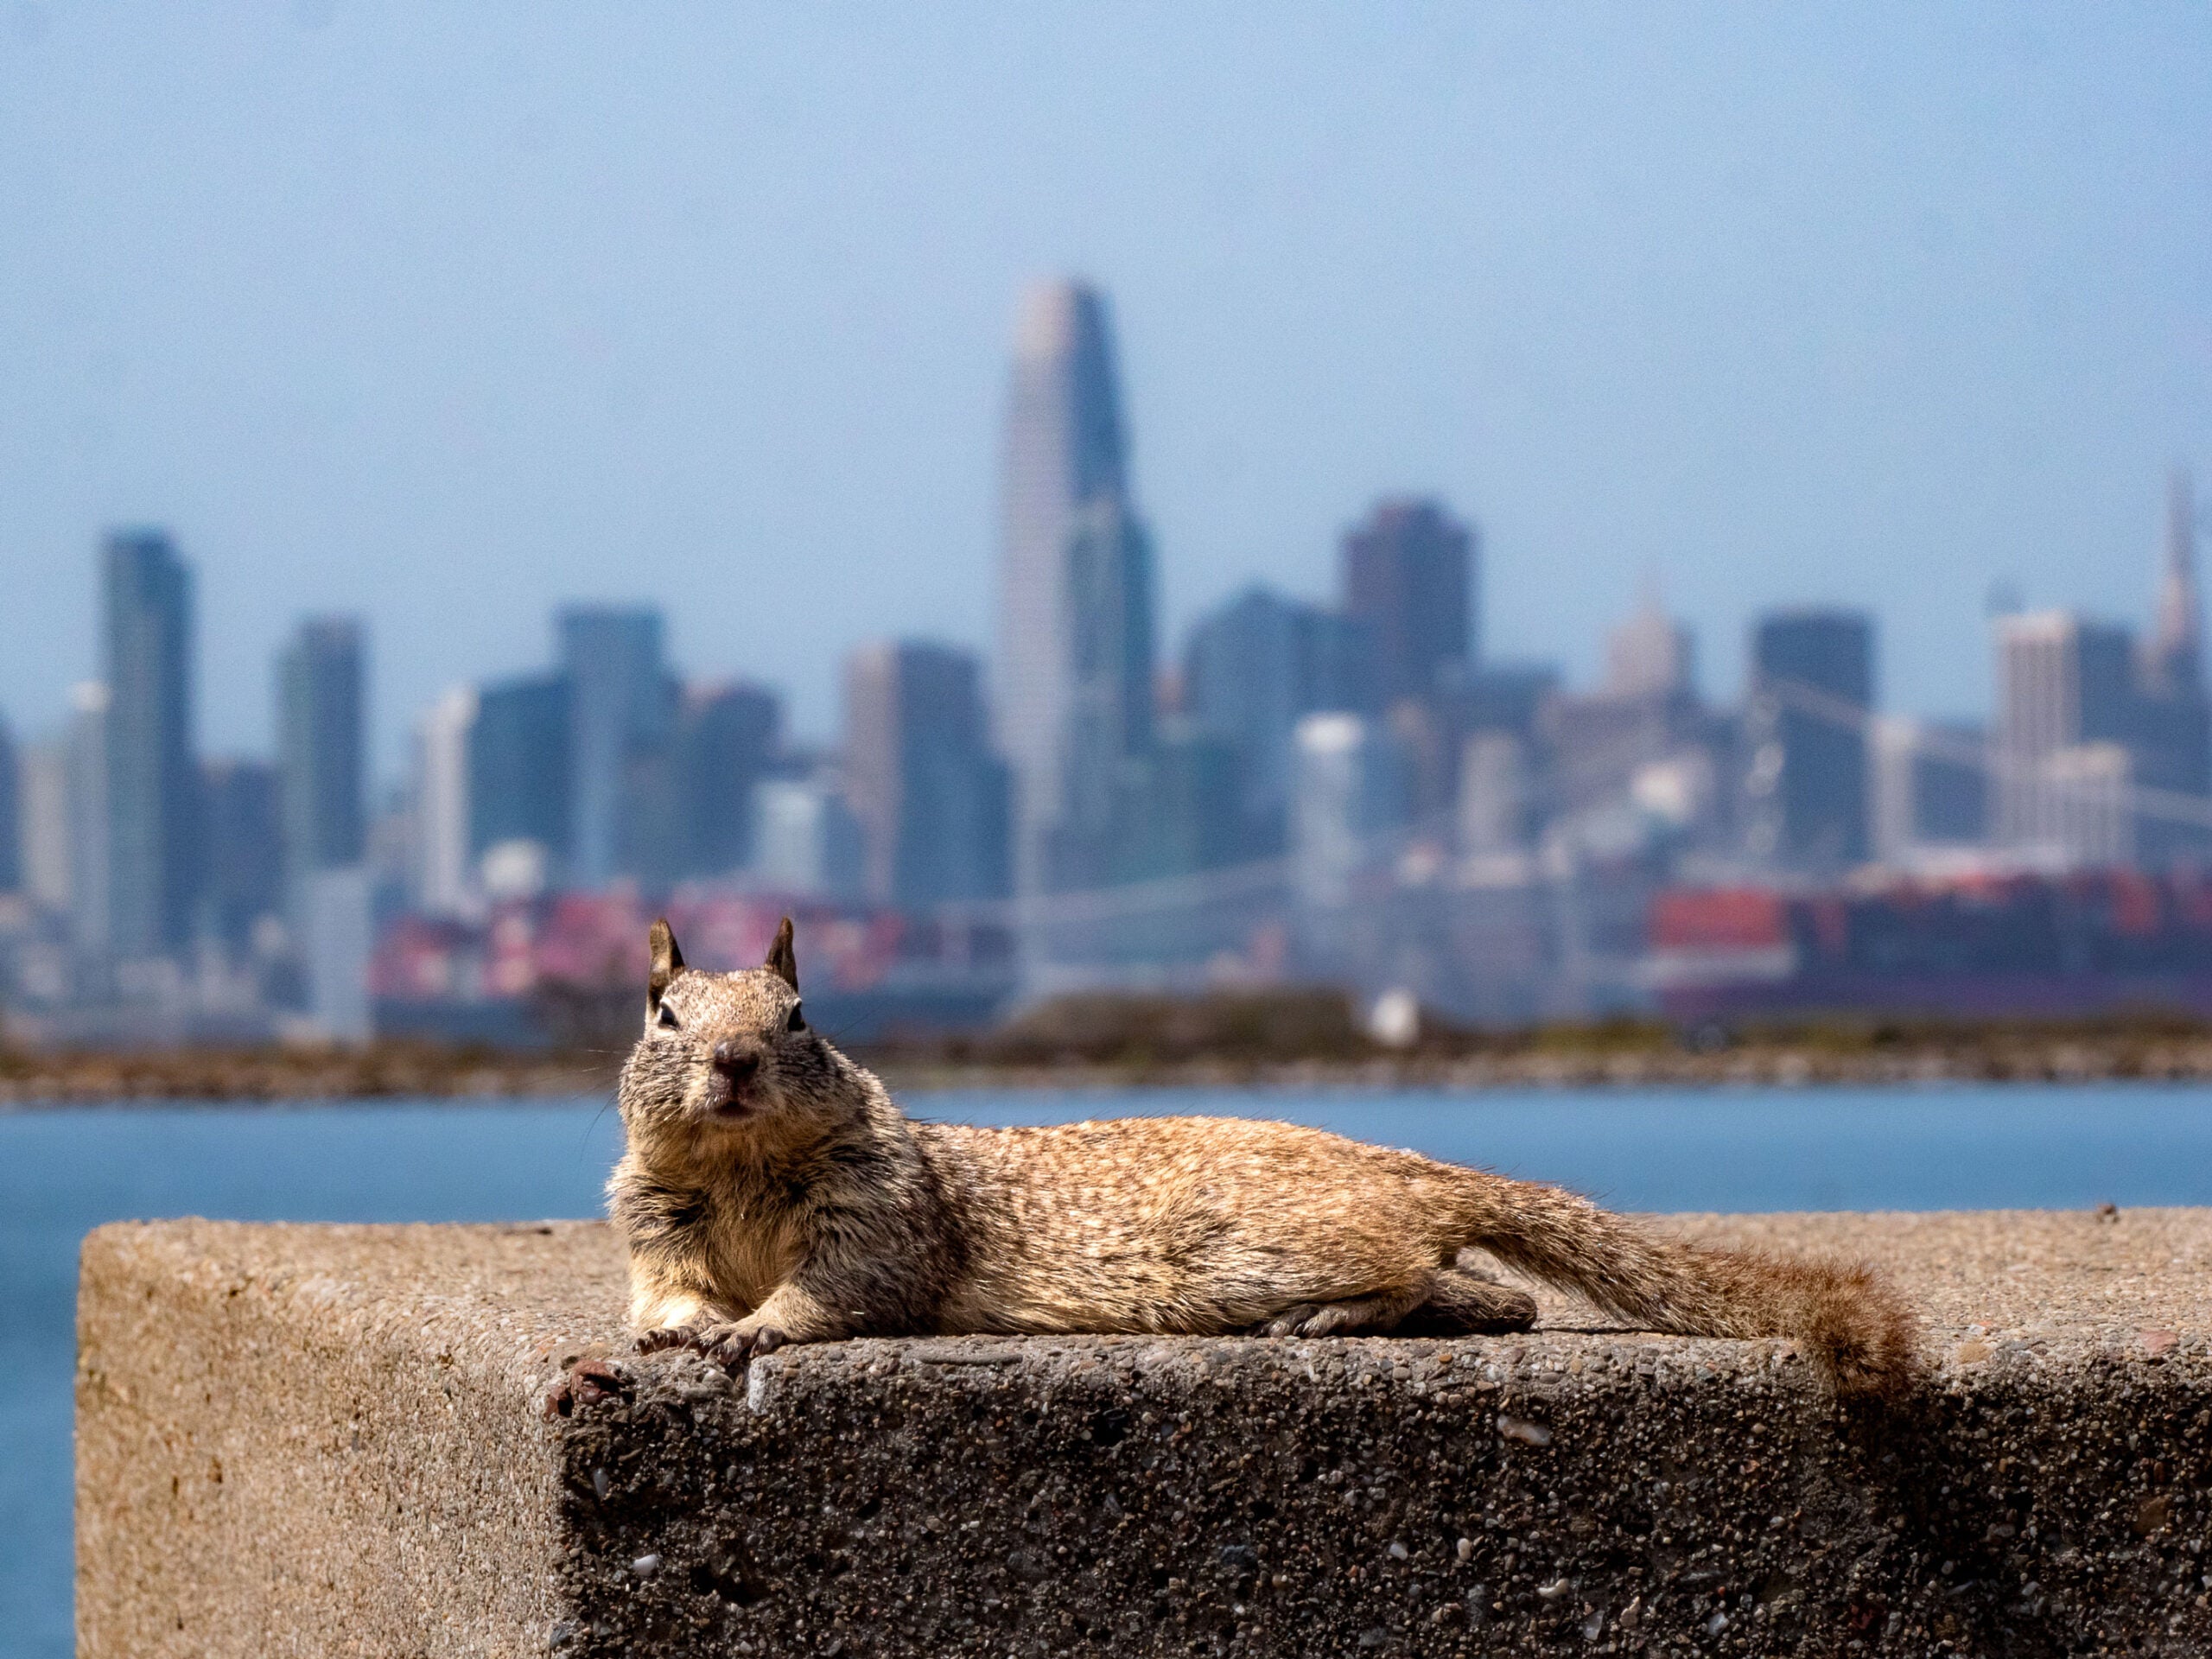 squirrel on the san francisco skyline picfair urban wildlife photo contest